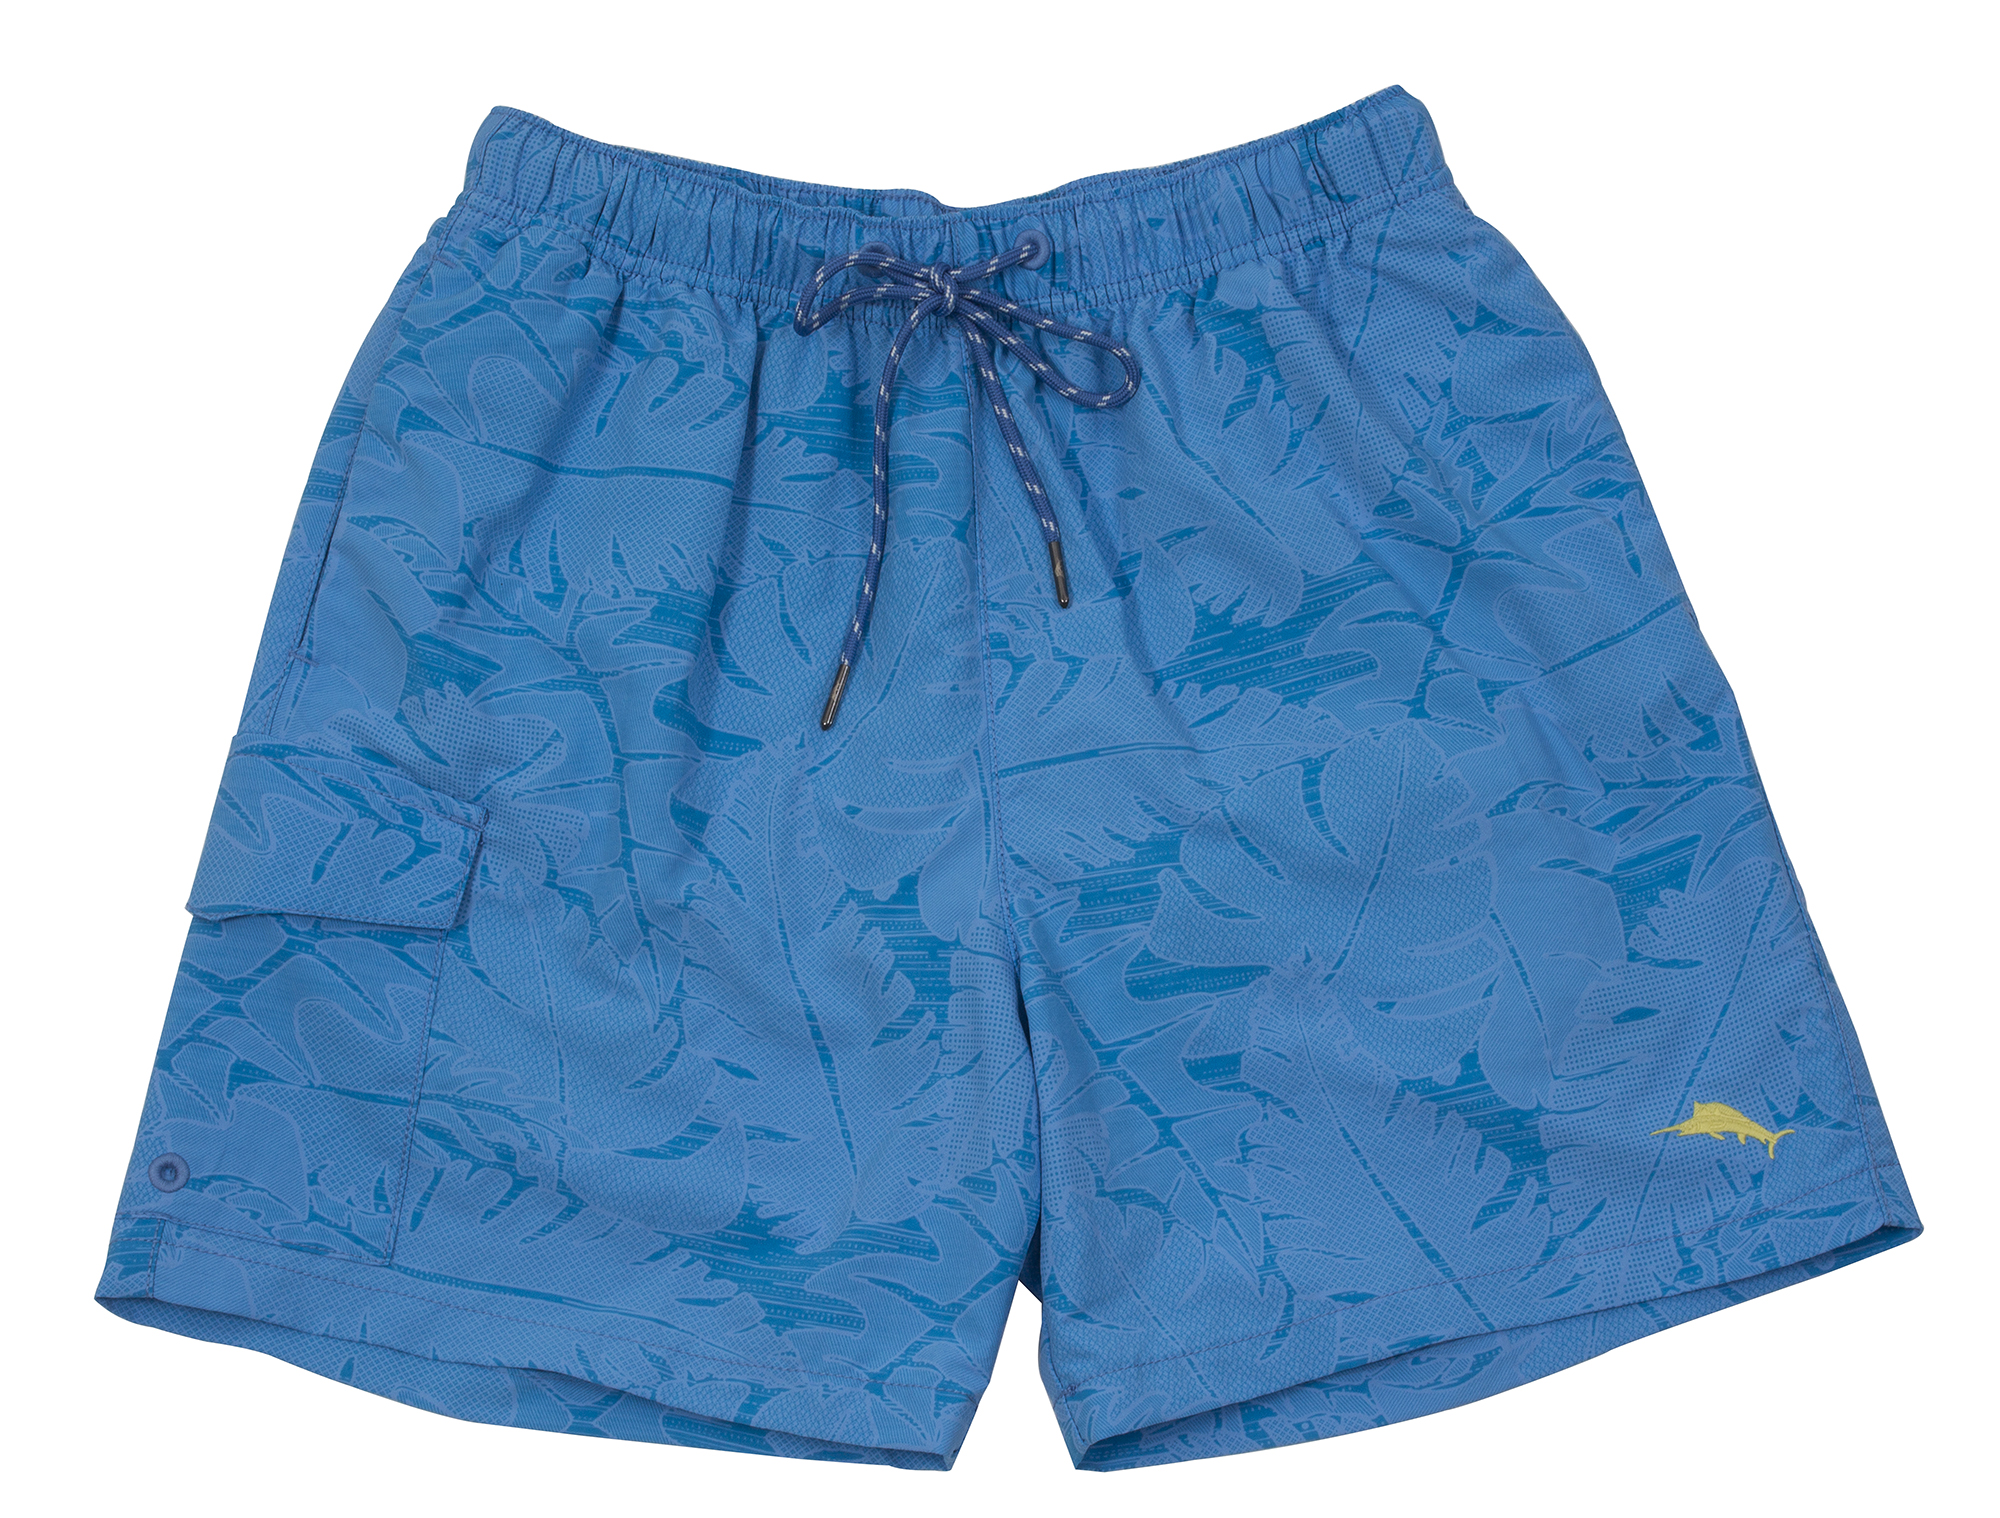 Tommy Bahama &quot;Naples Coral Florida&quot; swim trunks in &quot;blue isles,&quot; $68 at Belk Men&#039;s Store